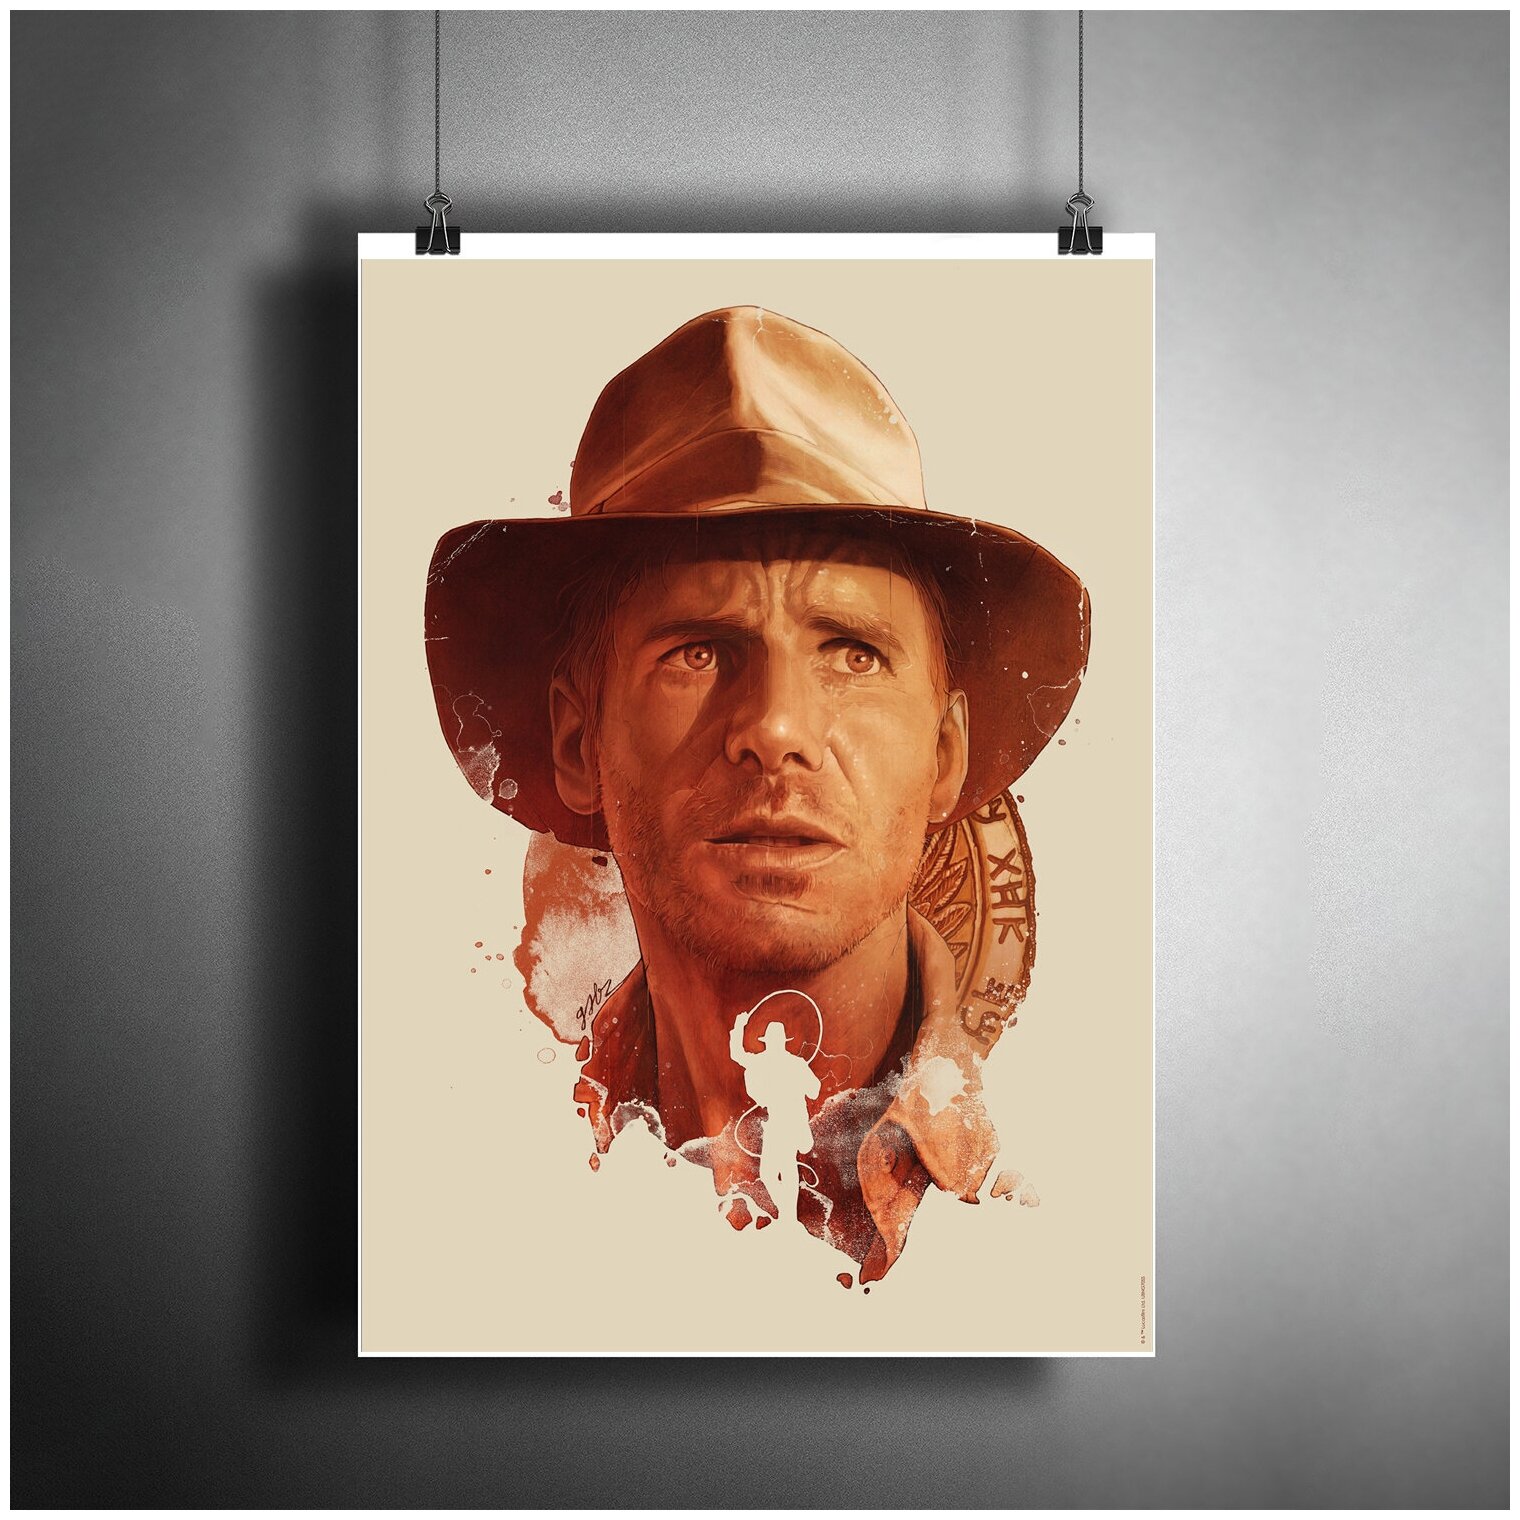 Постер плакат для интерьера "Фильм Стивена Спилберга: Индиана Джонс. Актёр Харрисон Форд. Indiana Jones"/ Декор дома, офиса, комнаты A3 (297 x 420 мм)